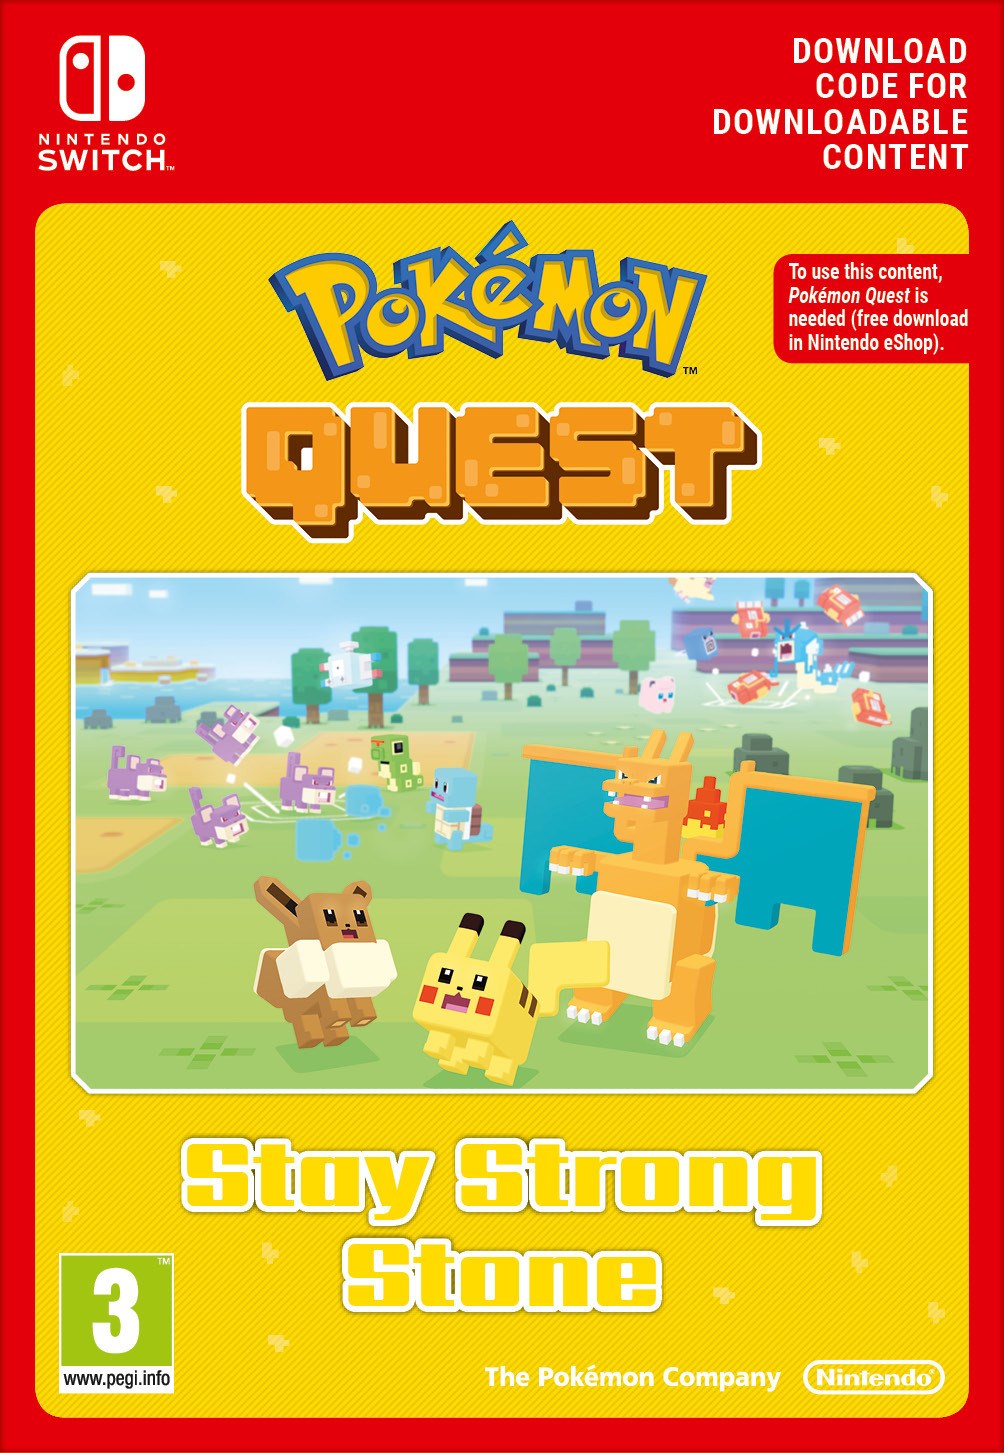 Pokémon™ Quest - Stay Strong Stone von Nintendo